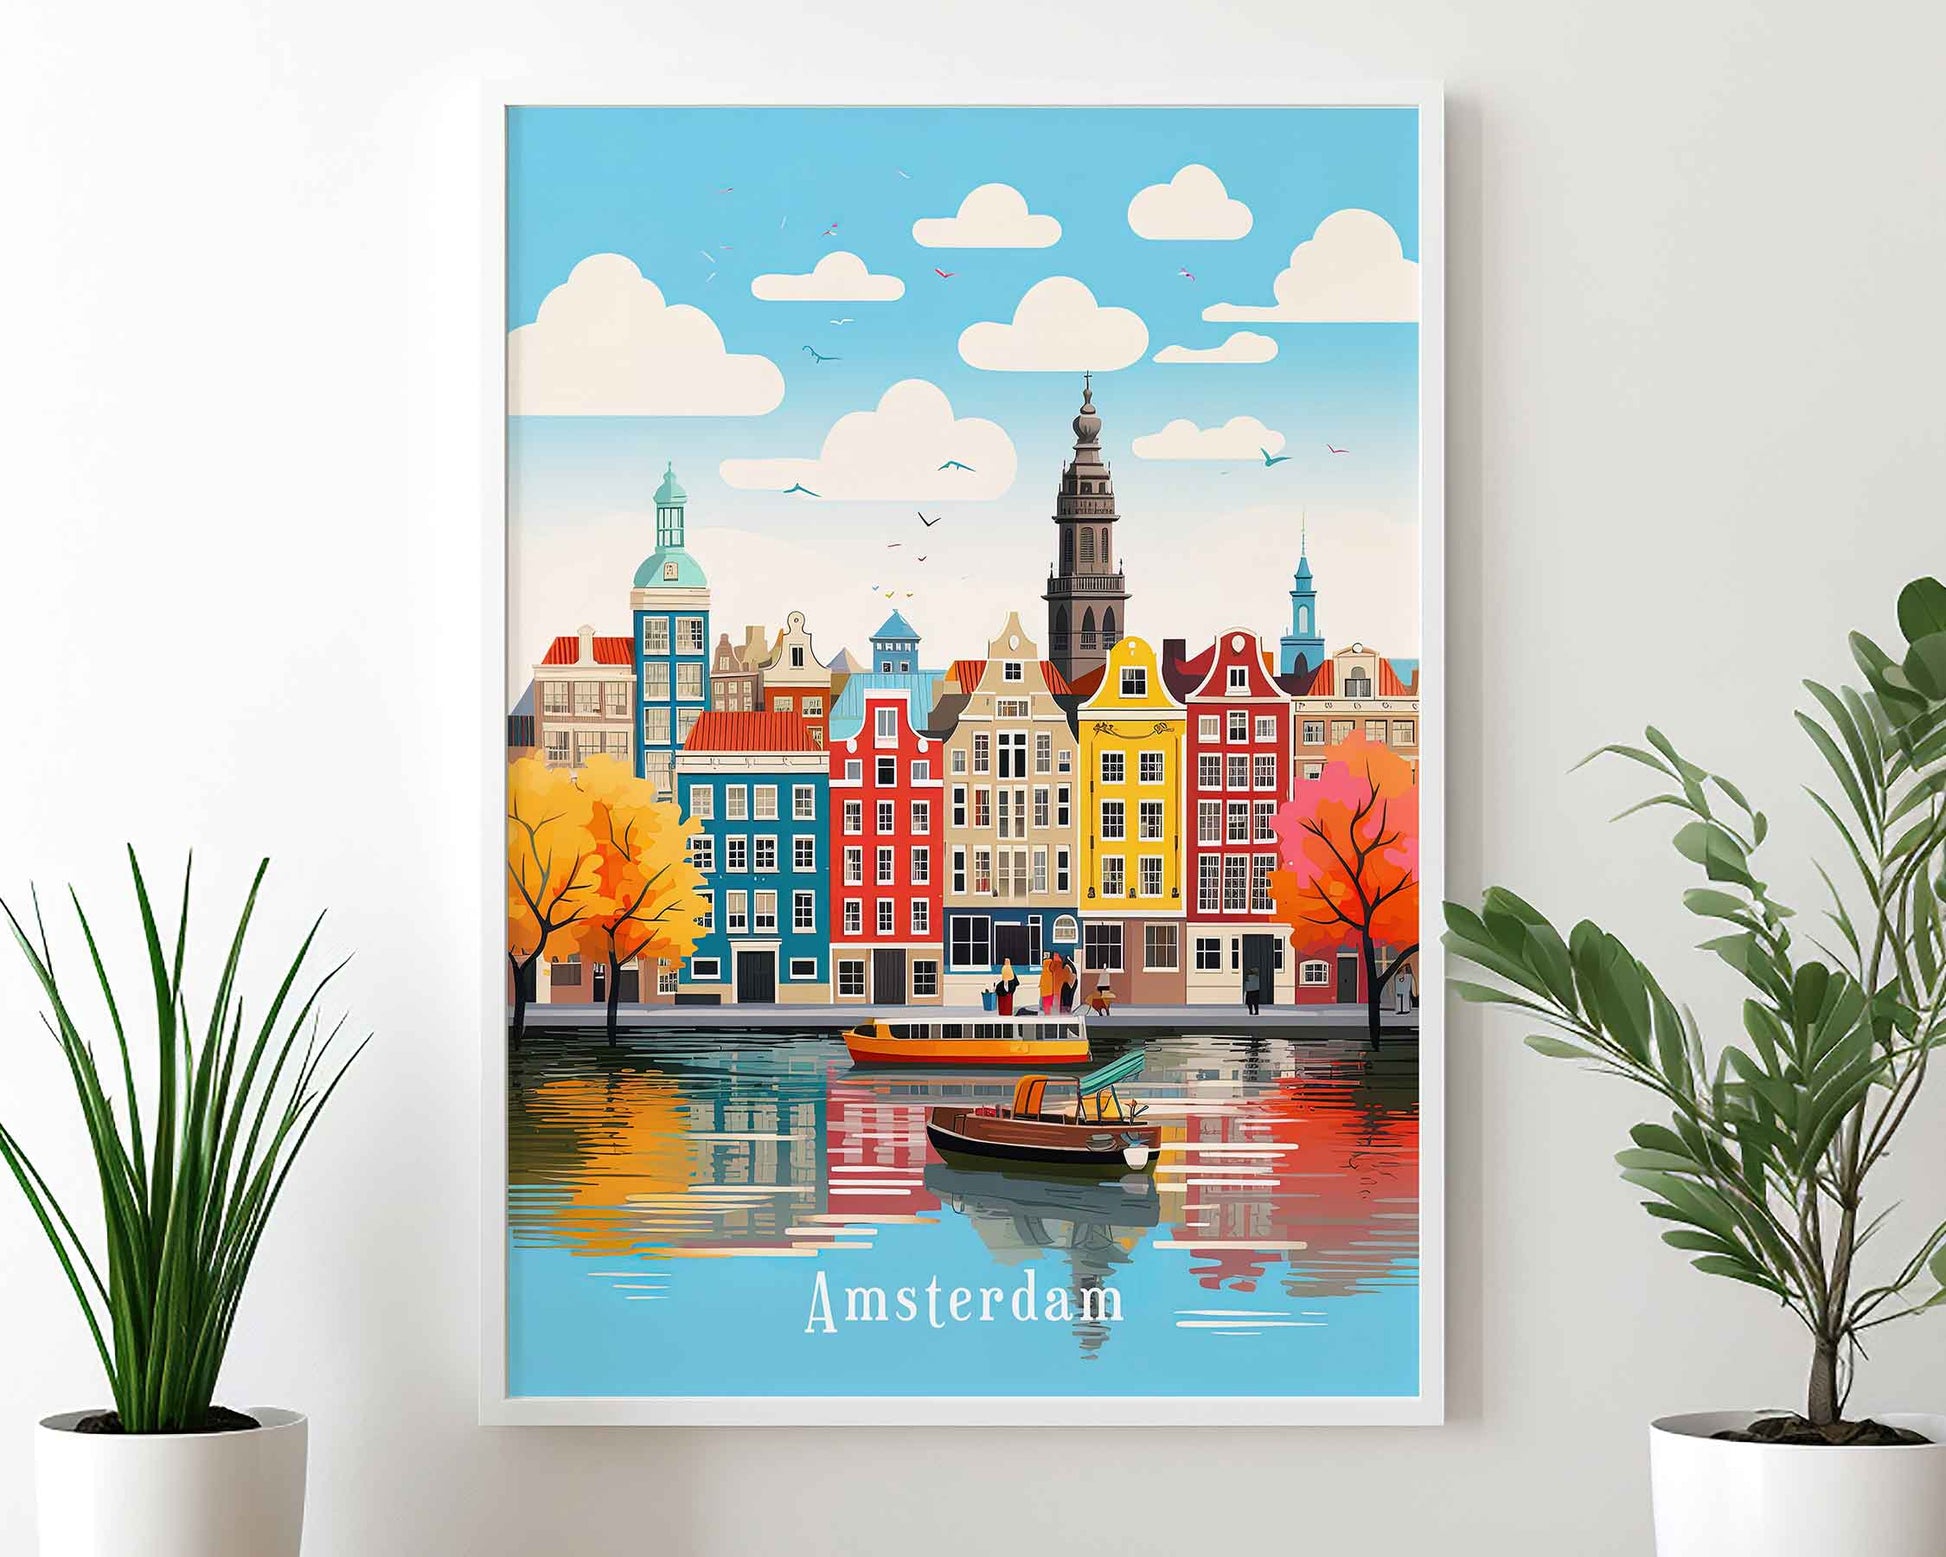 Framed Image of Amsterdam Travel Poster Wall Art Print Holland Illustration